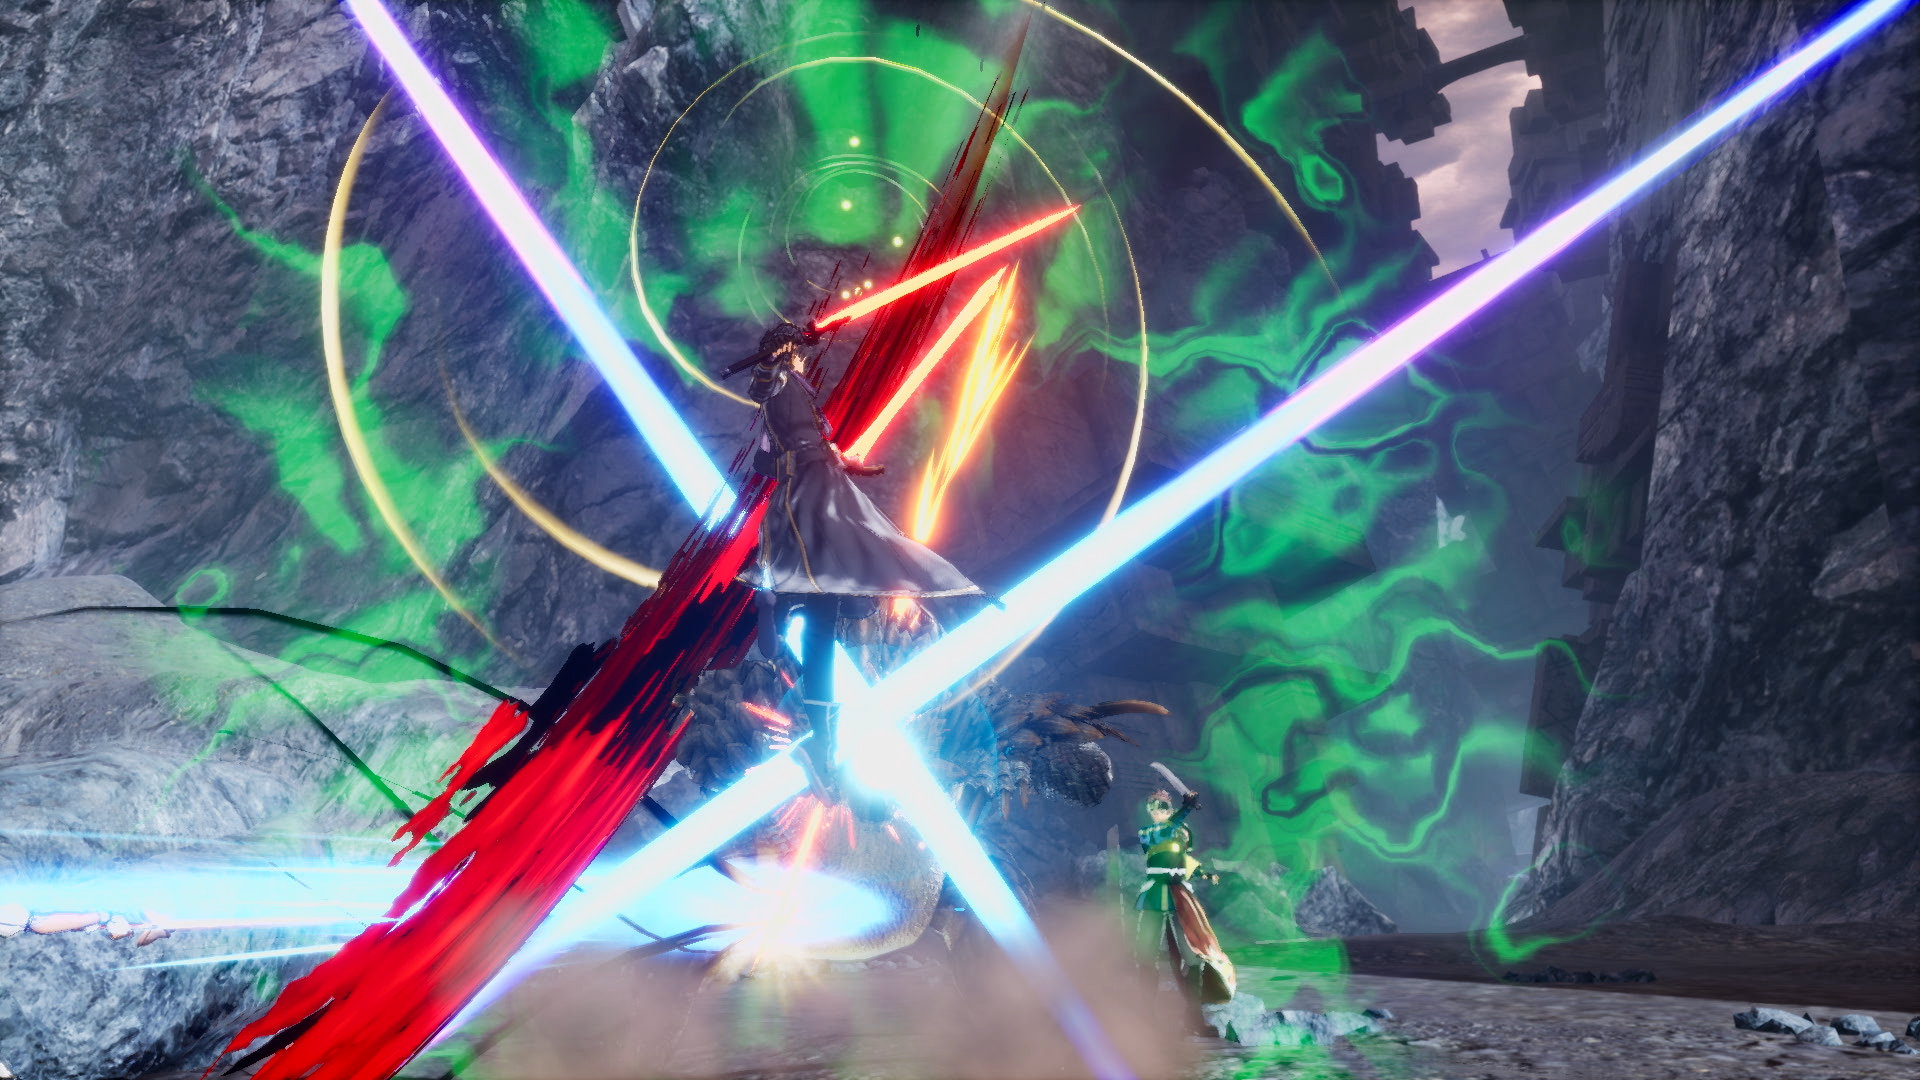 PS5-Sword Art Online Last Recollection - Blue Dragon Video Games